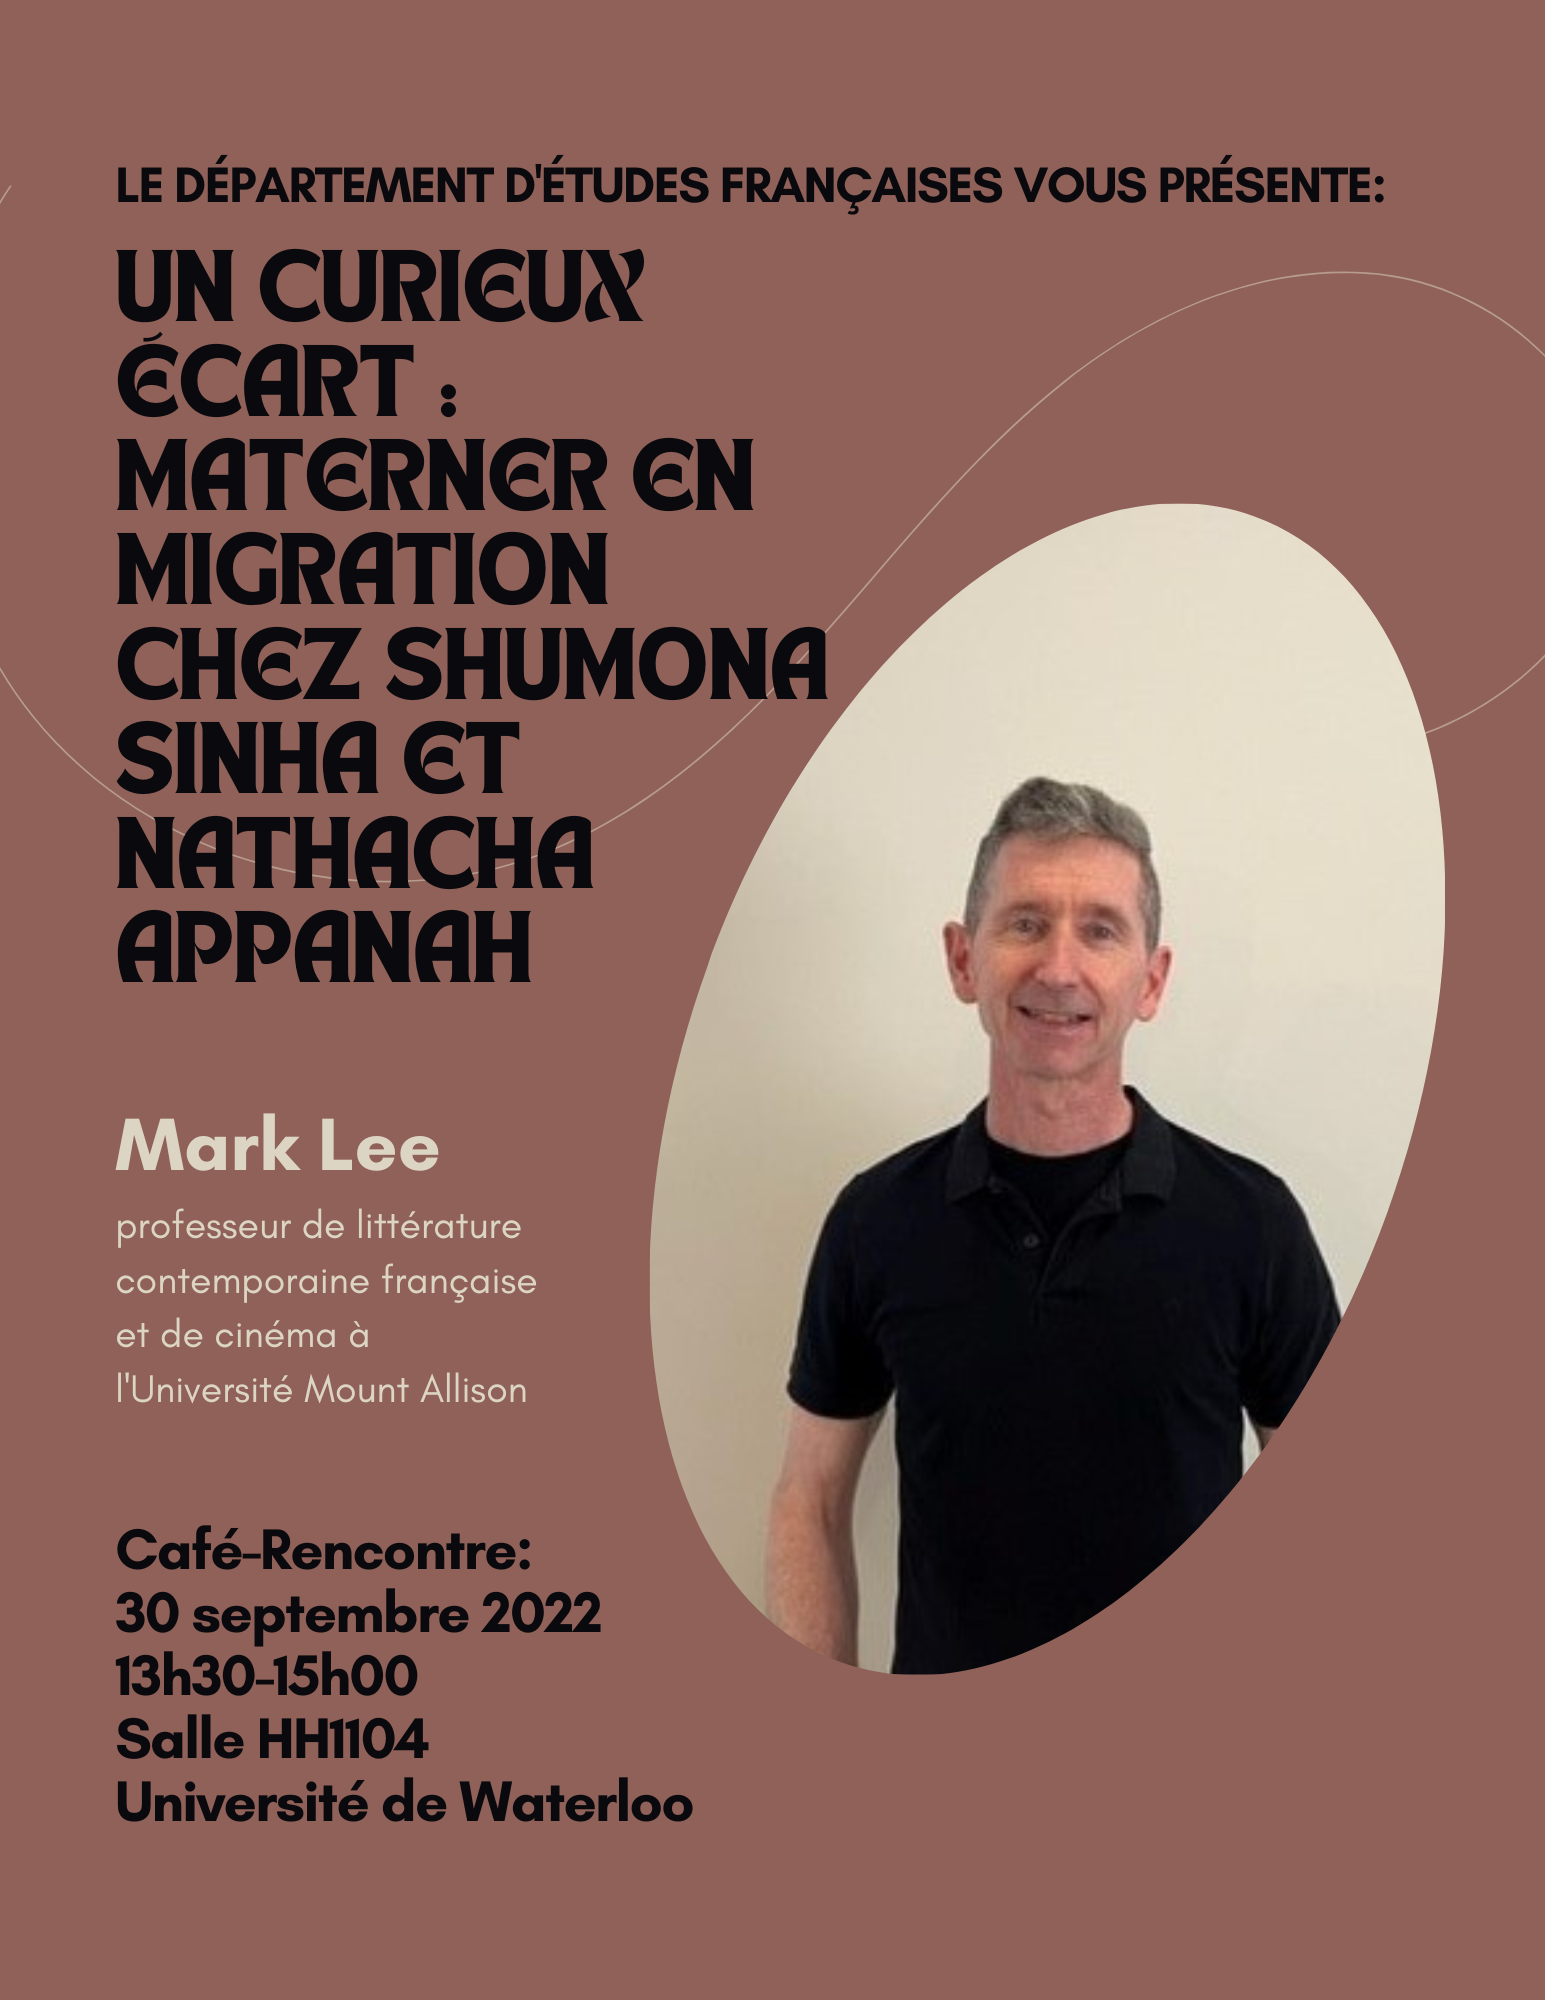 Poster for Mark Lee's Café-rencontre